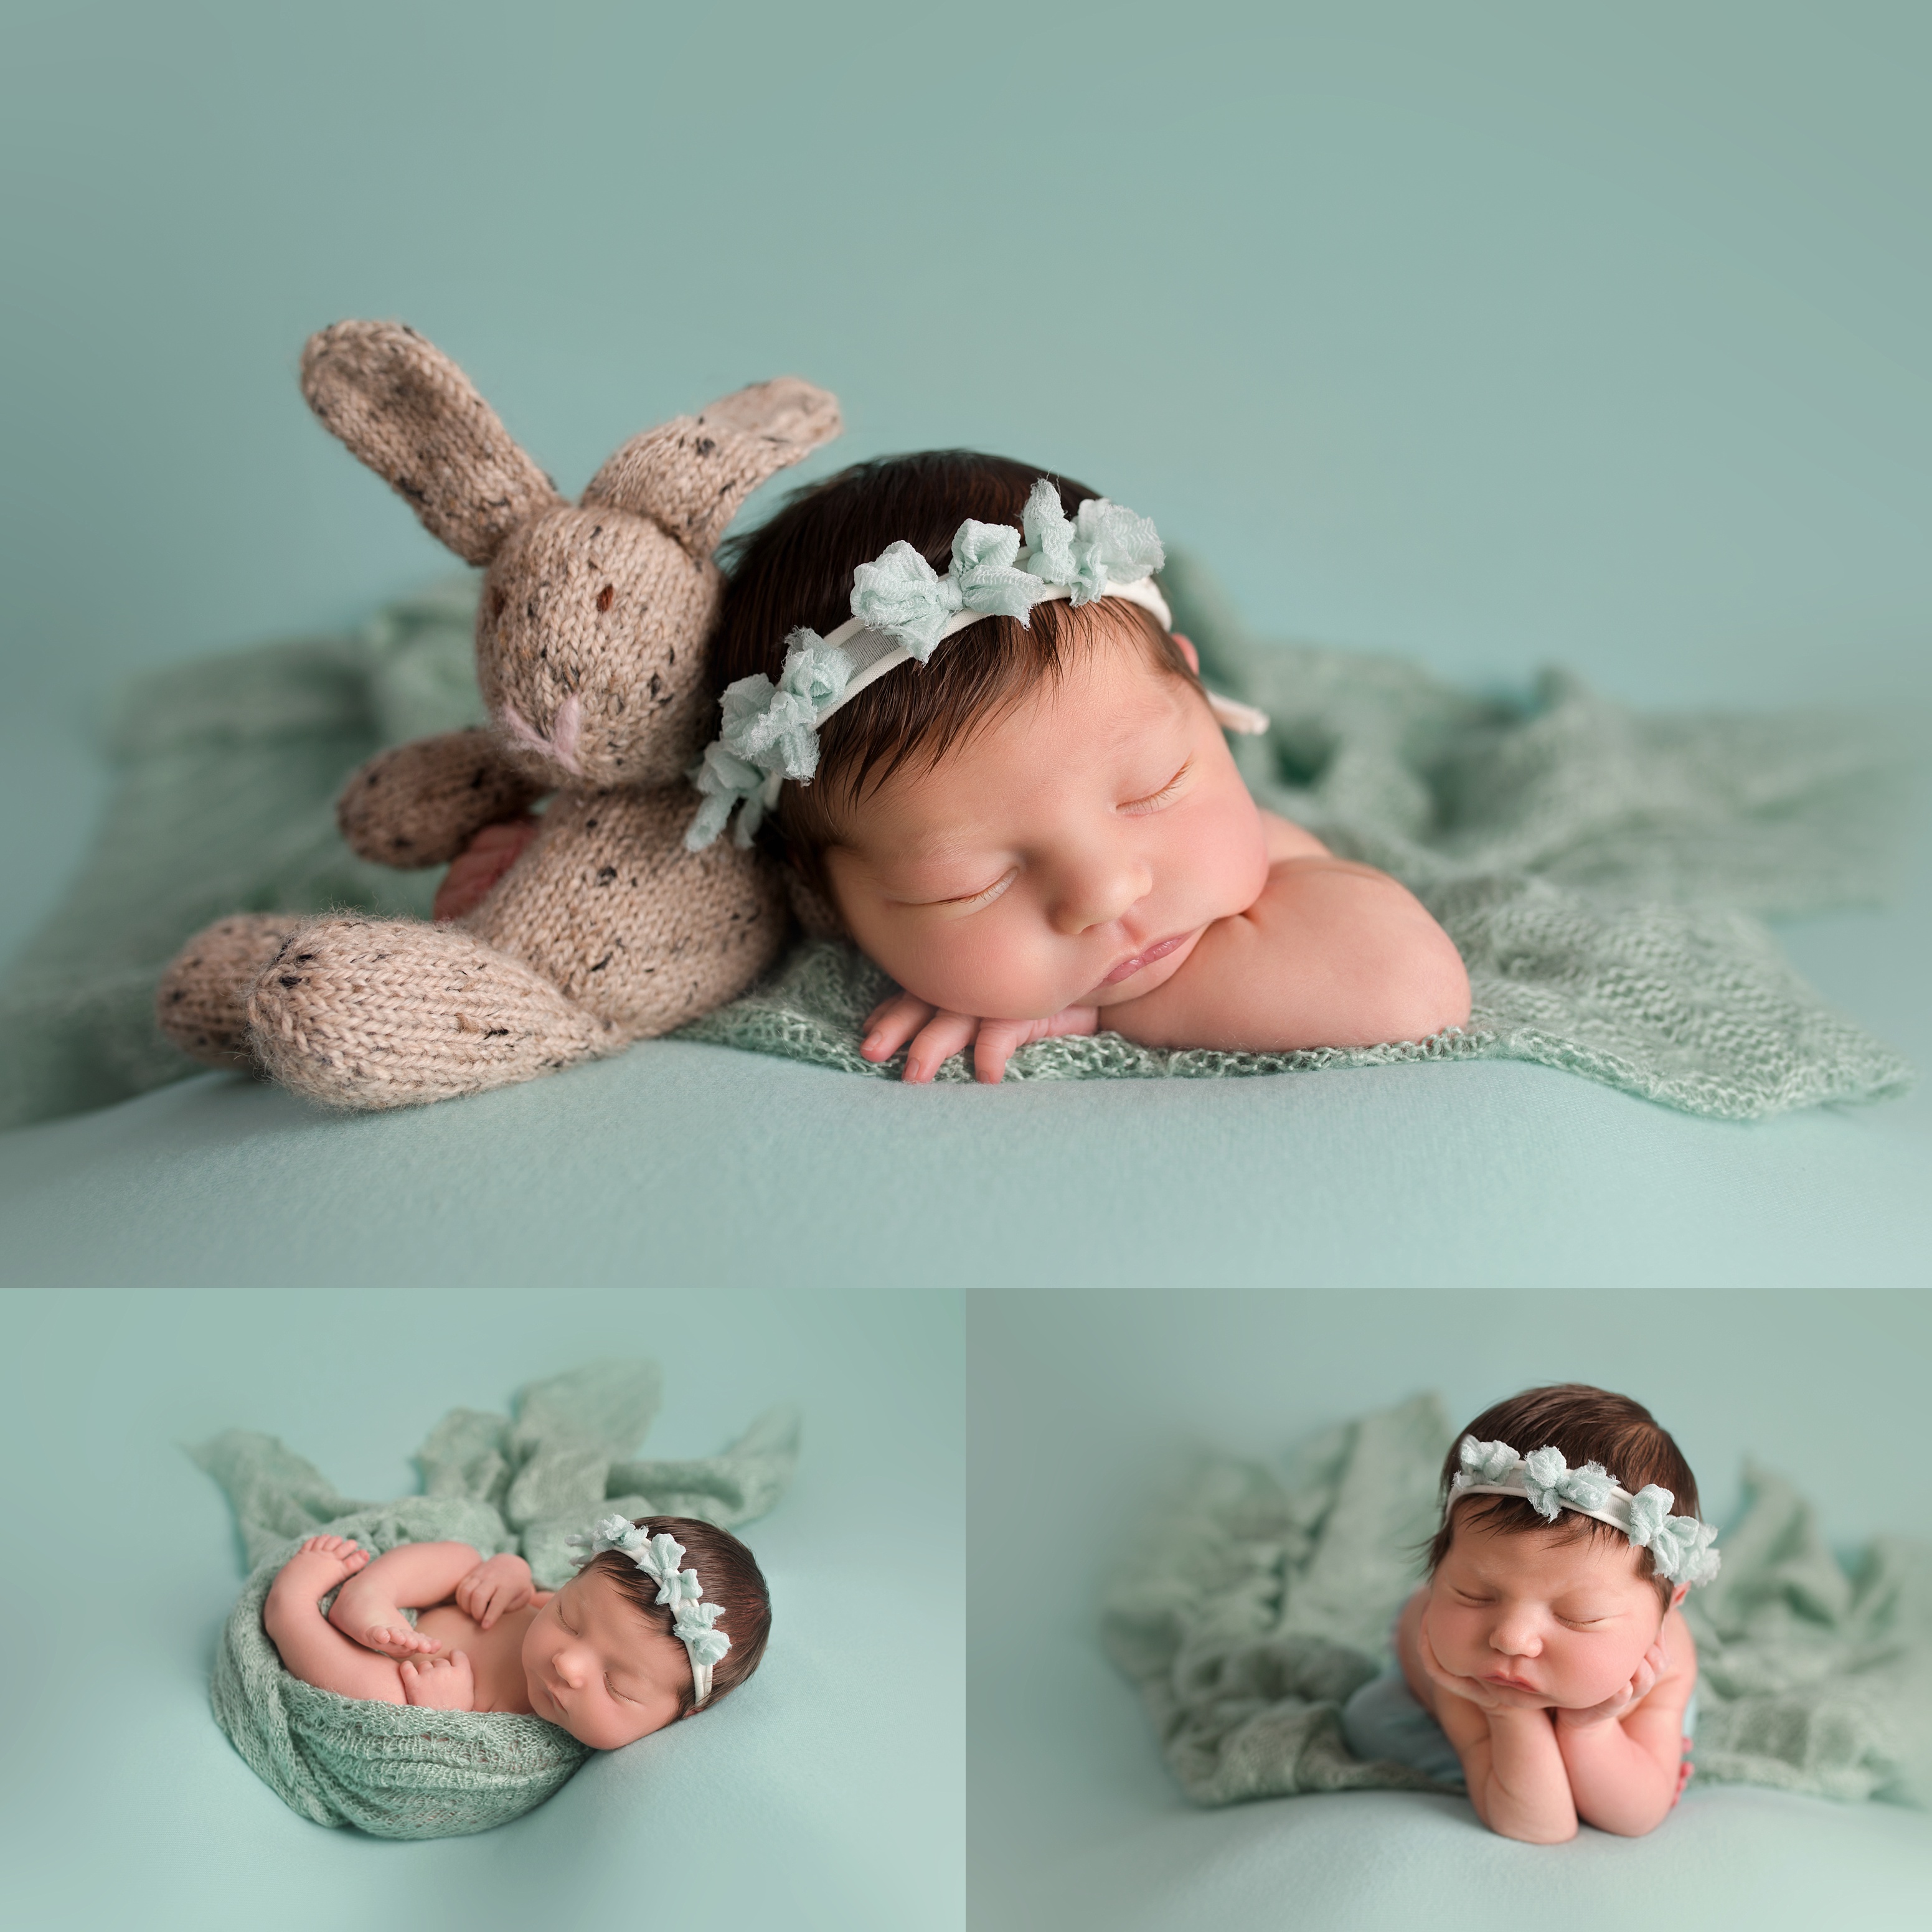 Little Cute Brownhaired Baby Girl Posing Stock Photo 13561240 | Shutterstock